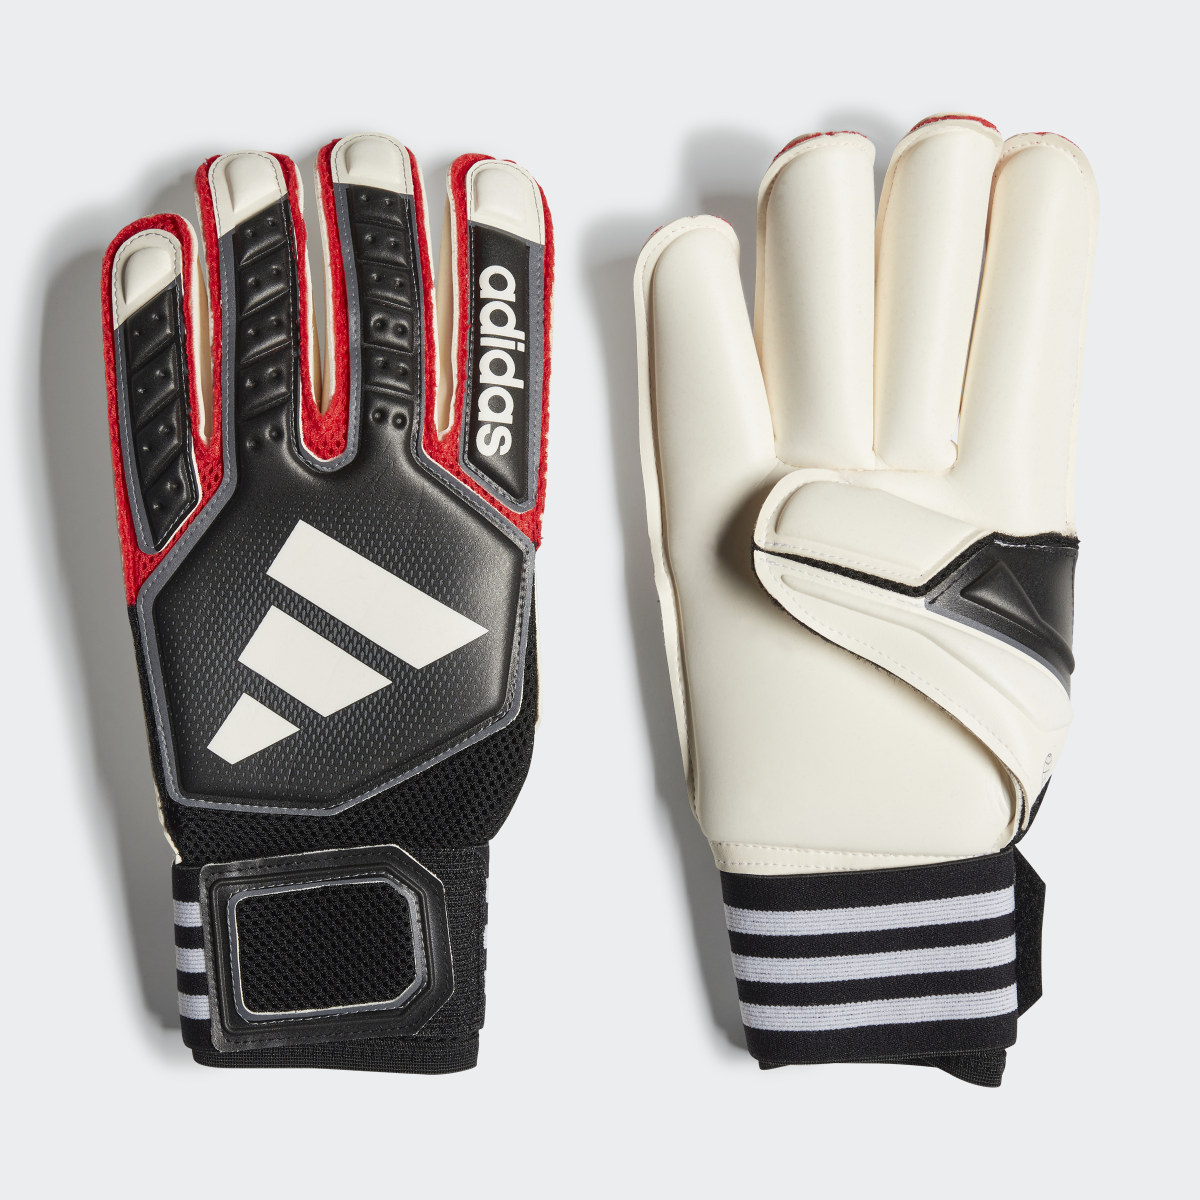 Adidas Tiro Pro Goalkeeper Gloves. 3